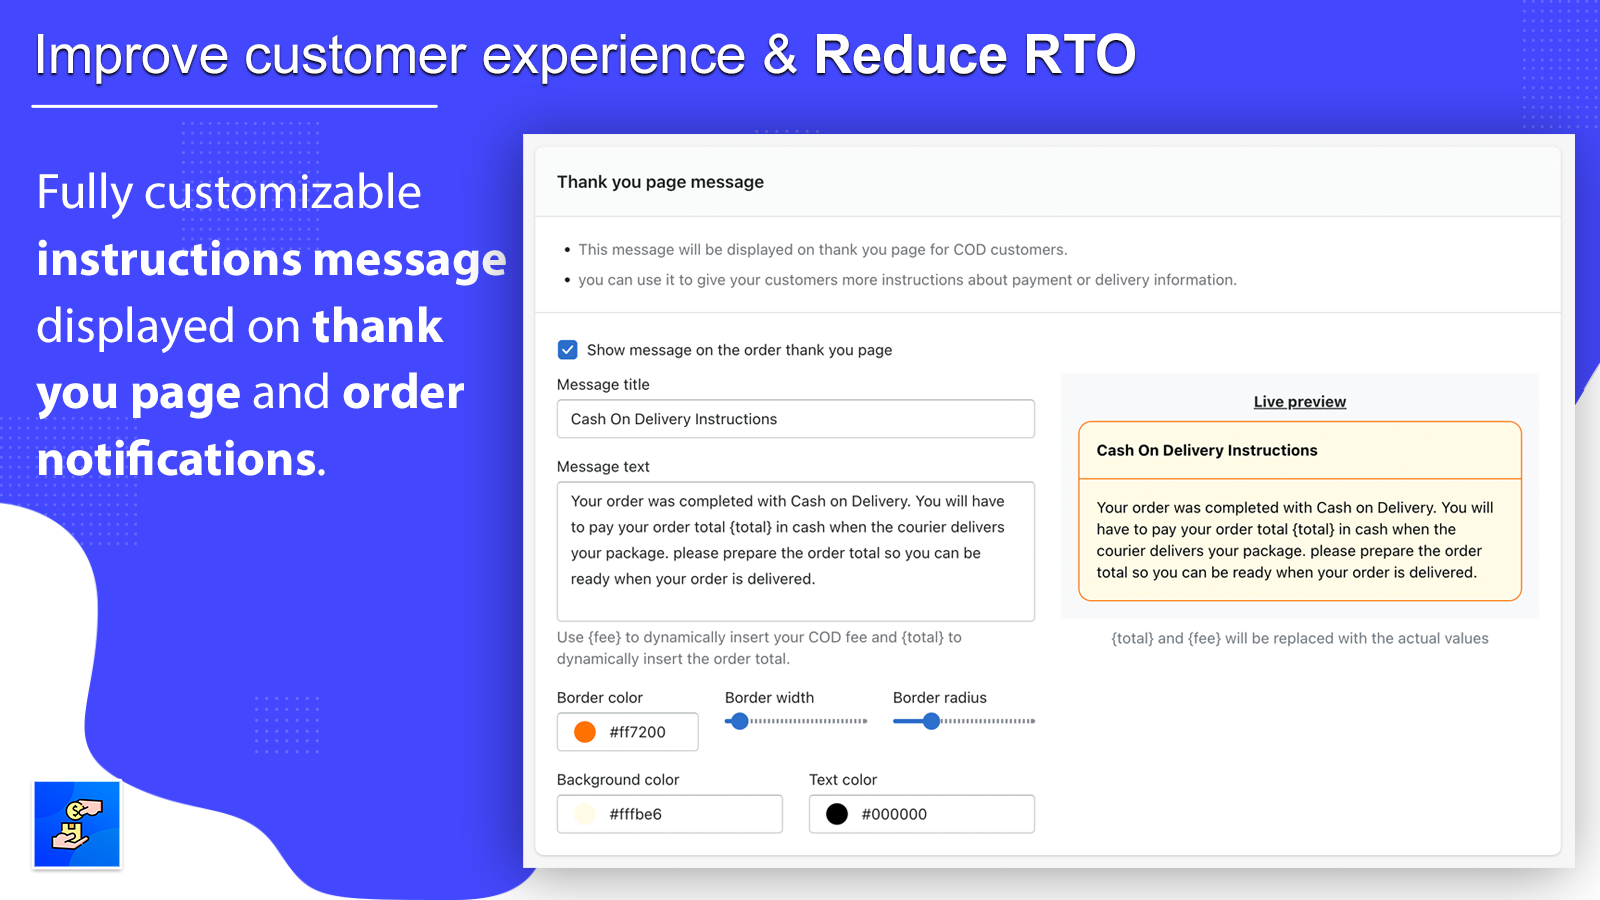 Improve customer experience & reduce RTO